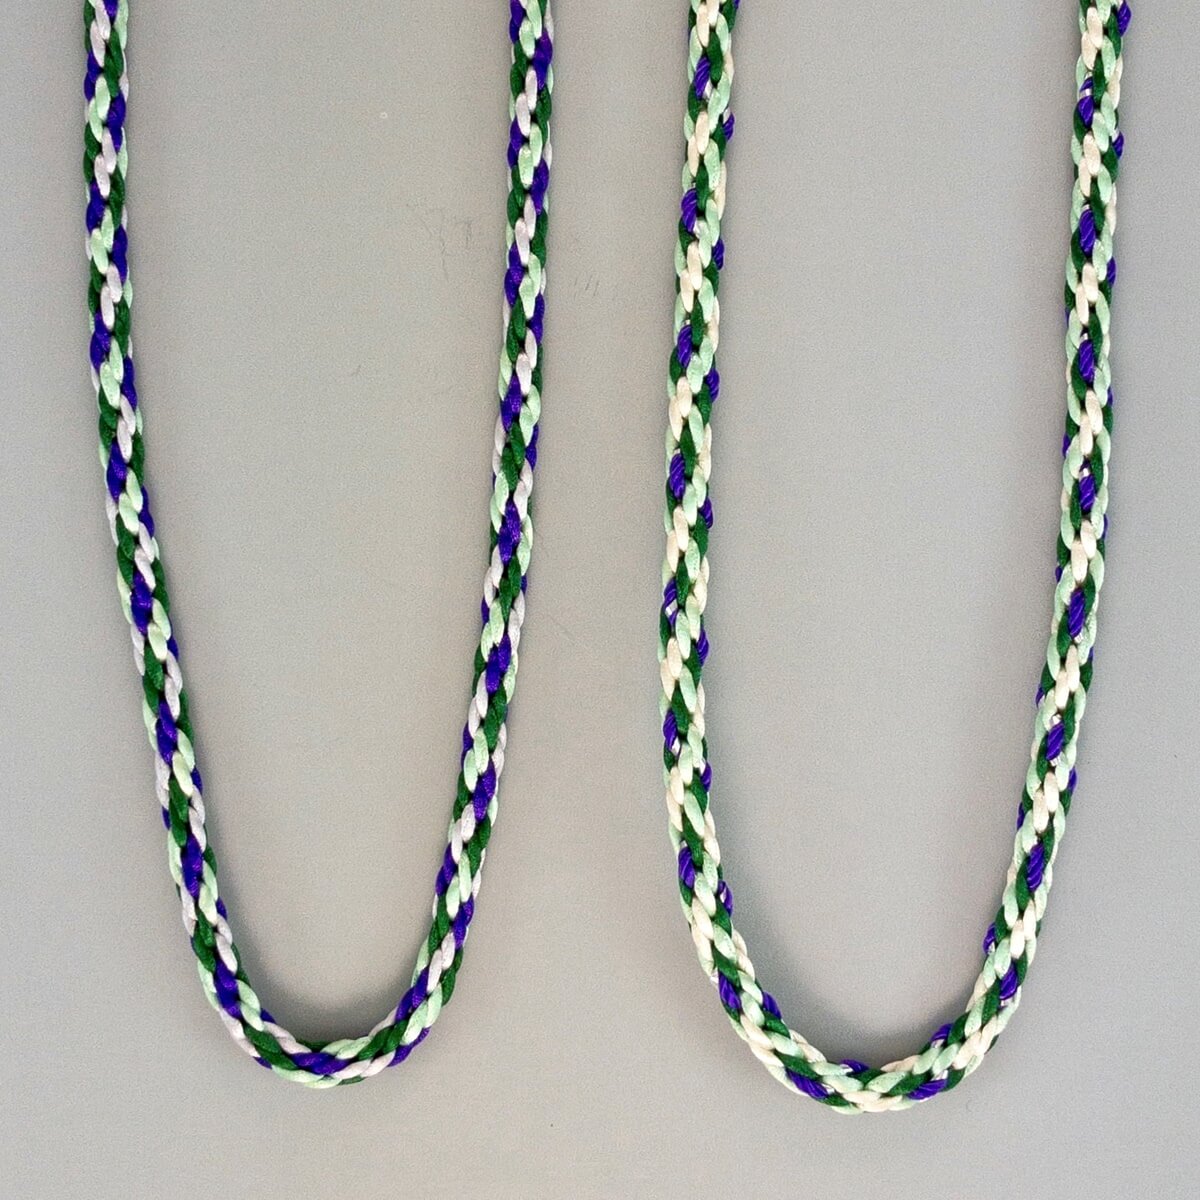 Kumihimo fiber braids, handwoven from 8 strands of fiber.